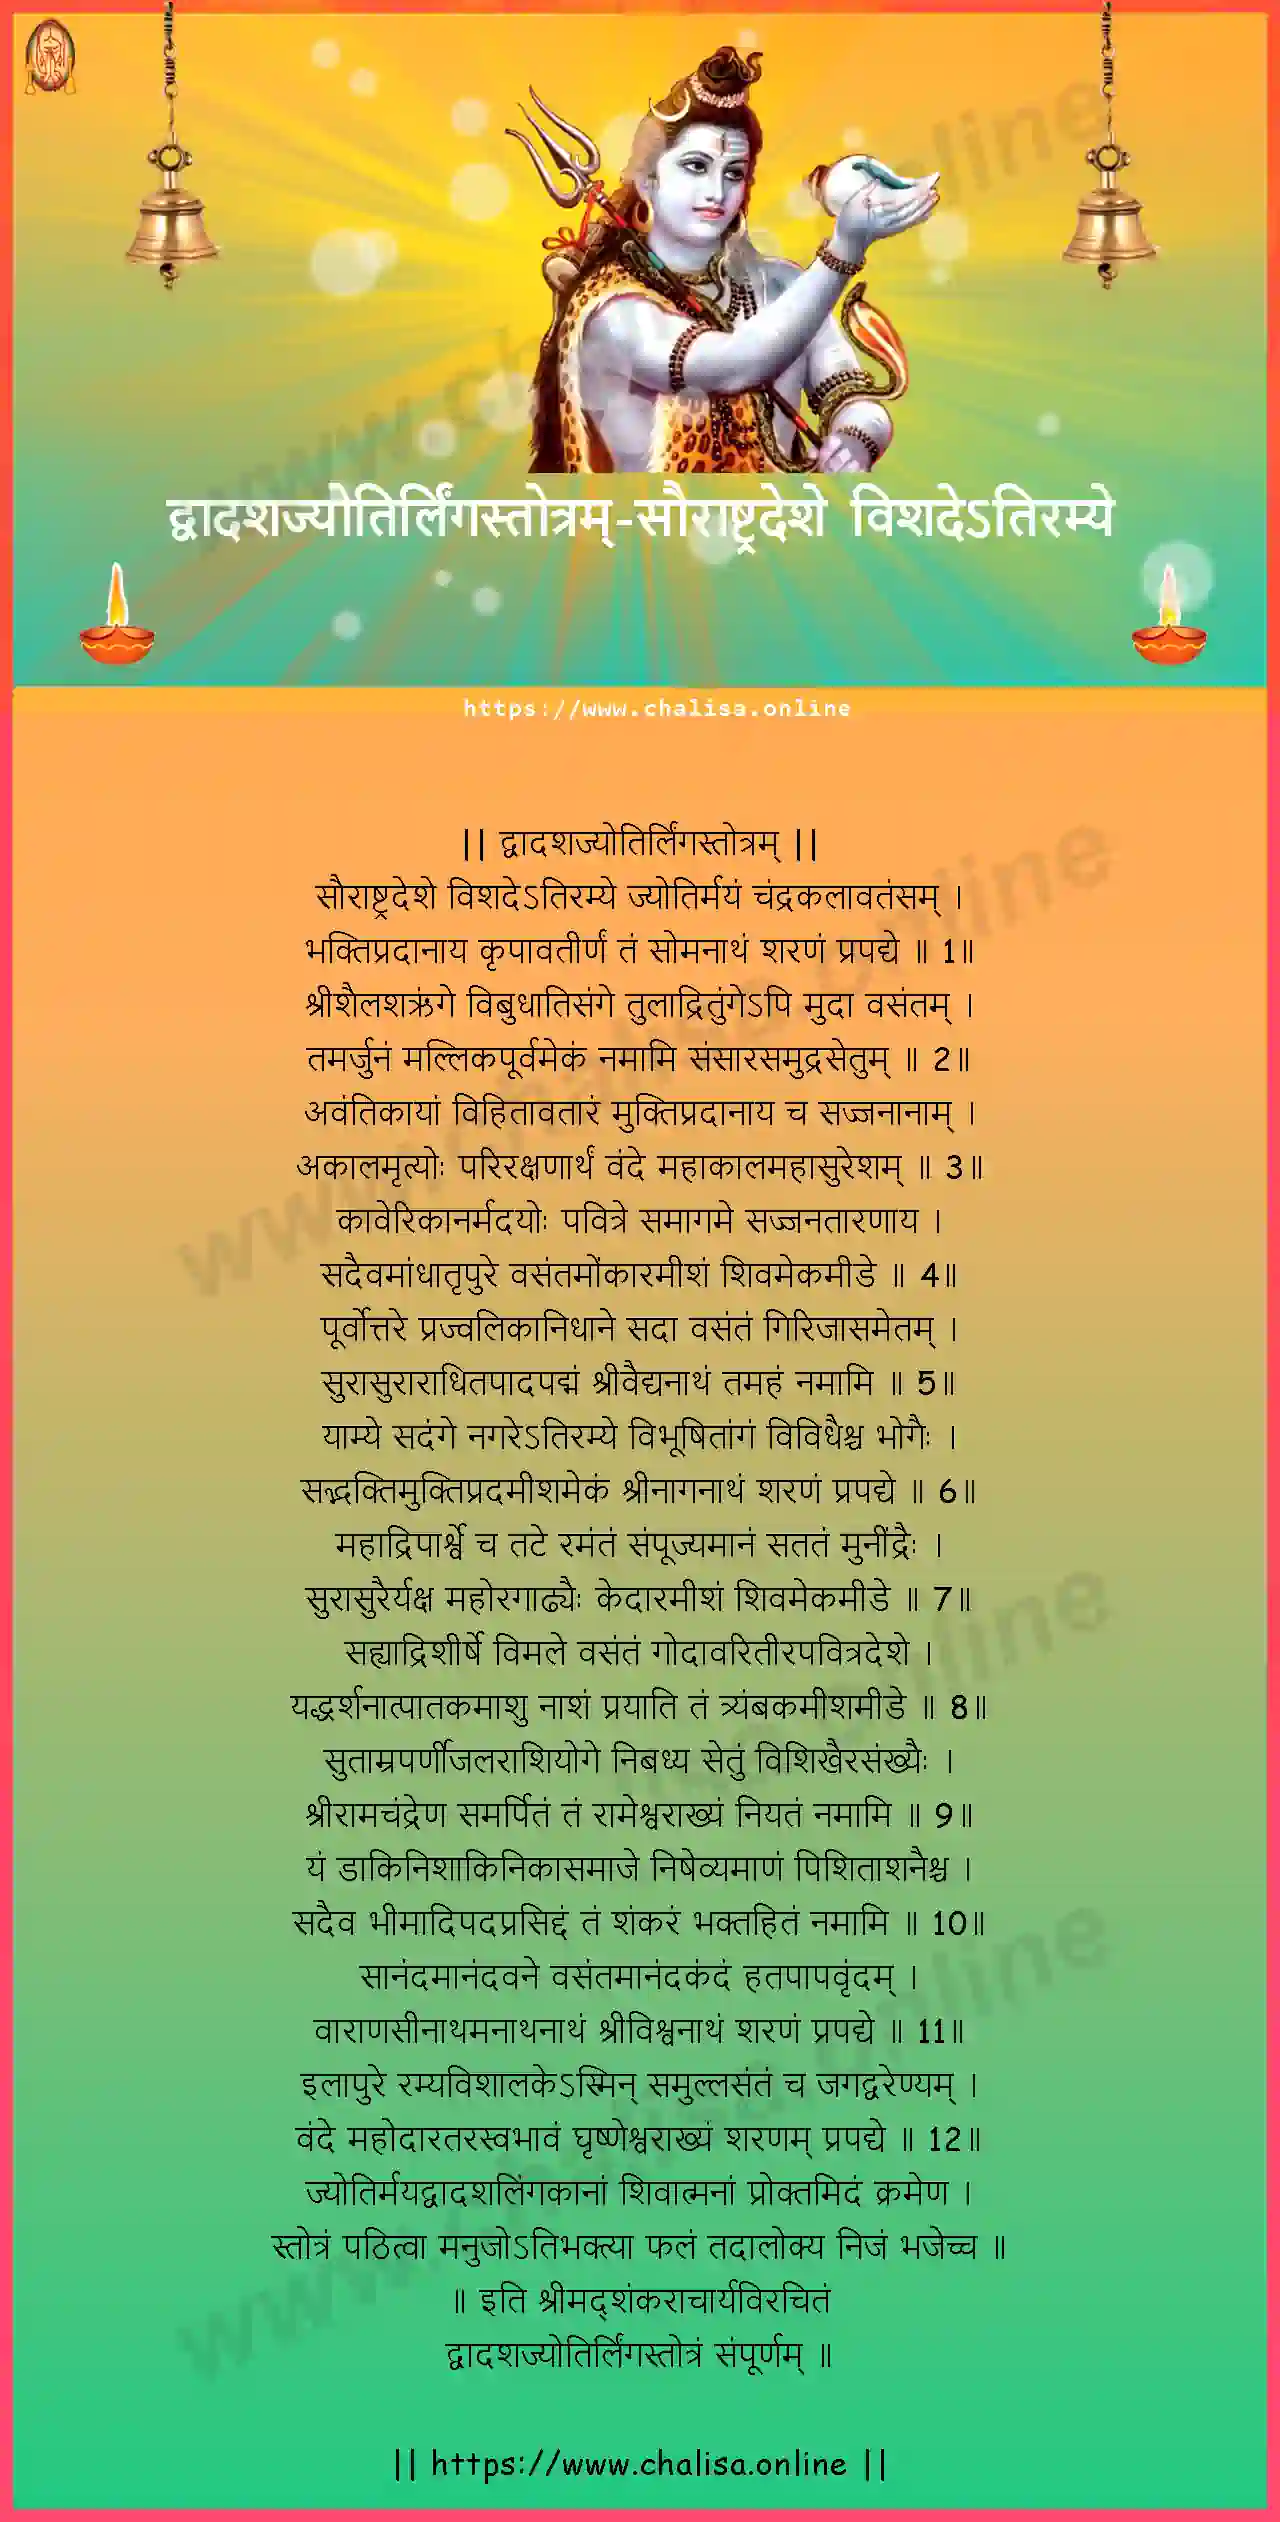 saurastradese-dvadasha-jyothirlinga-stotram-konkani-konkani-lyrics-download